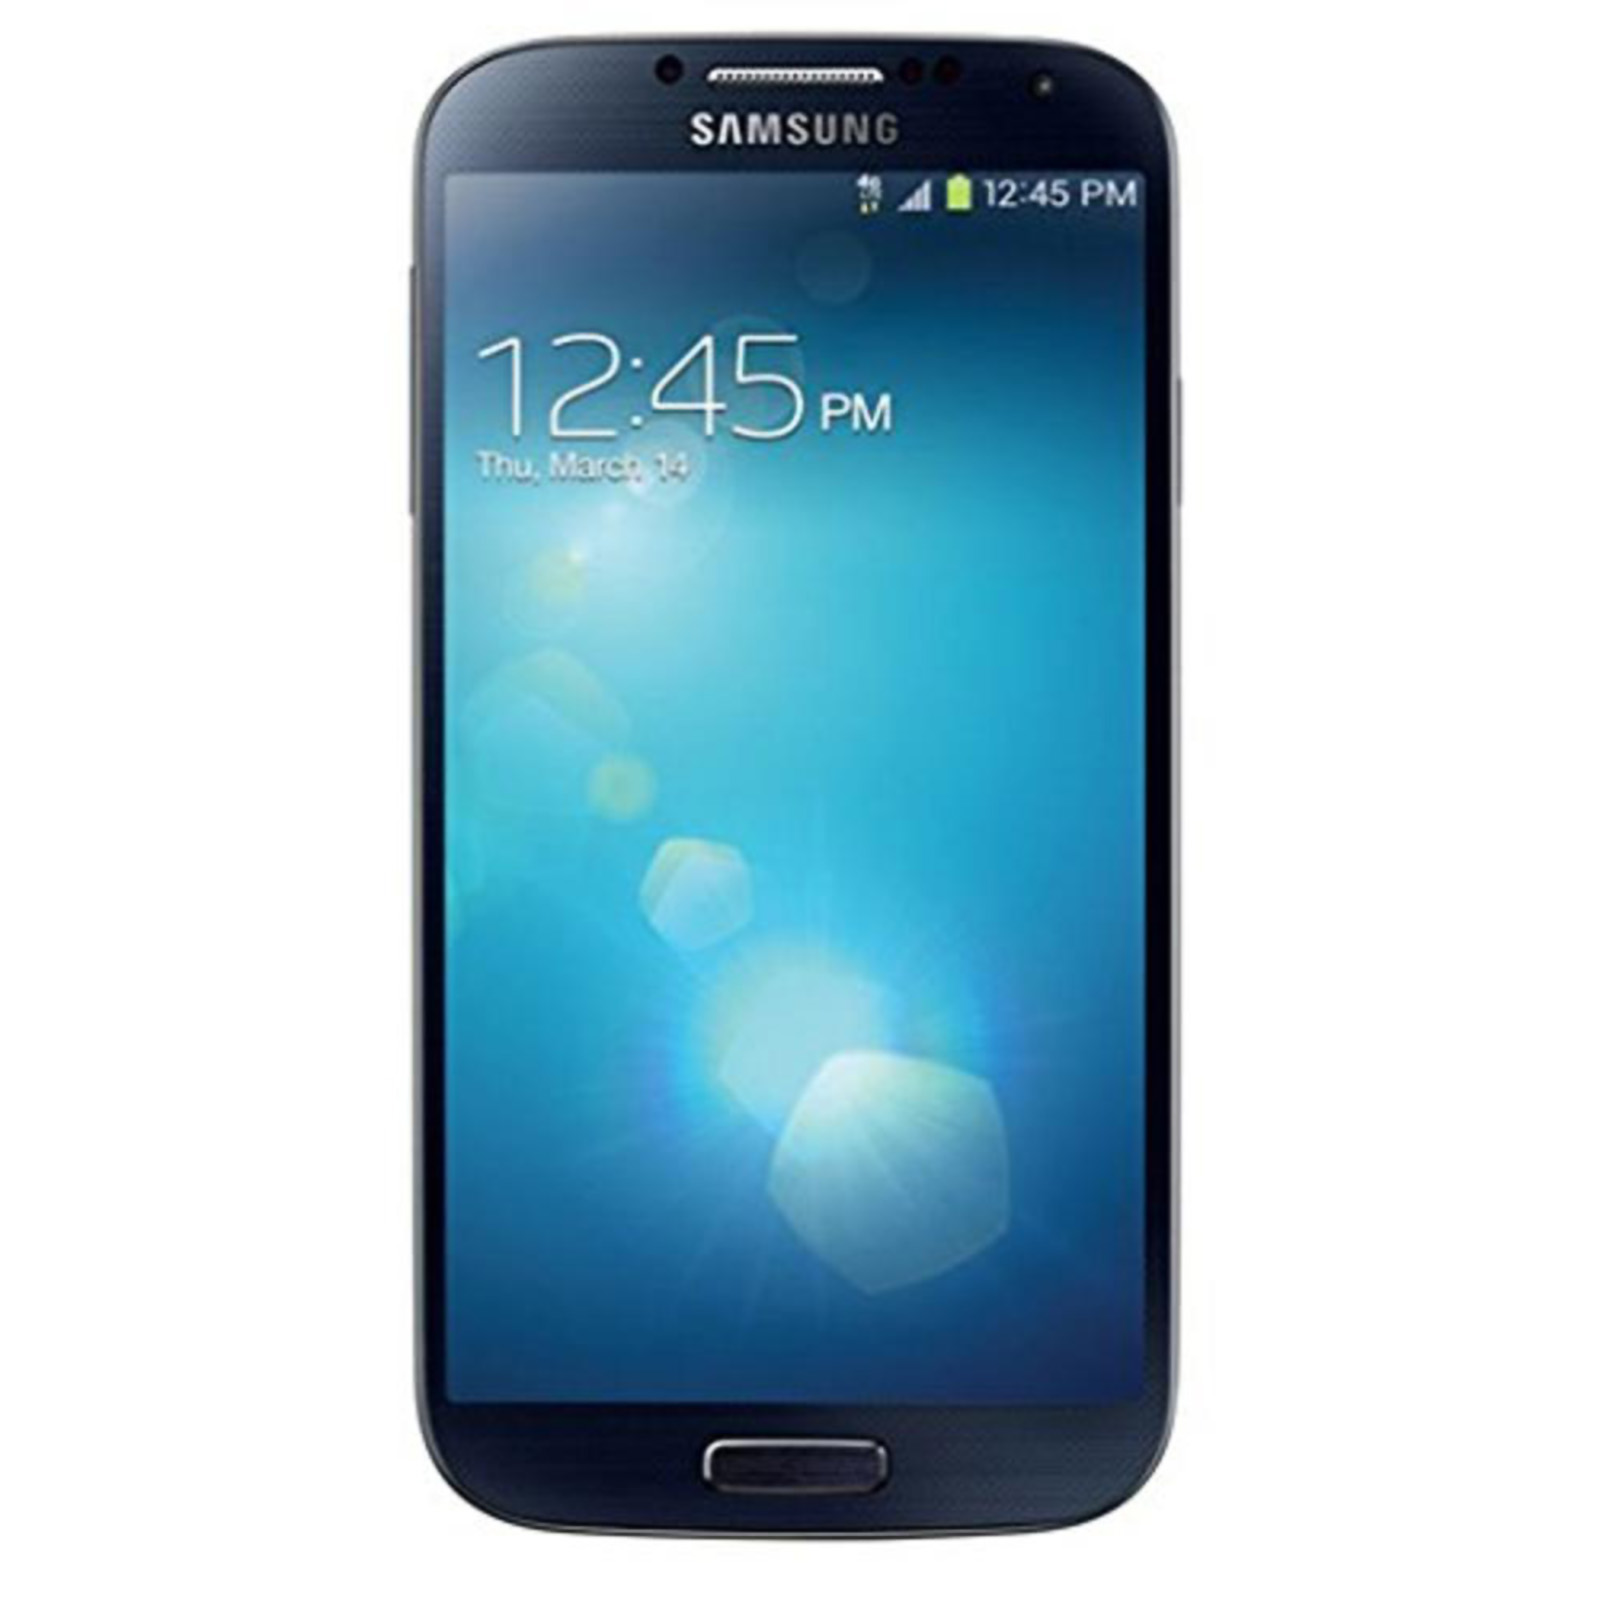 Samsung 16GB Unlocked Galaxy S4 Smartphone for T-Mobile - Black Mist